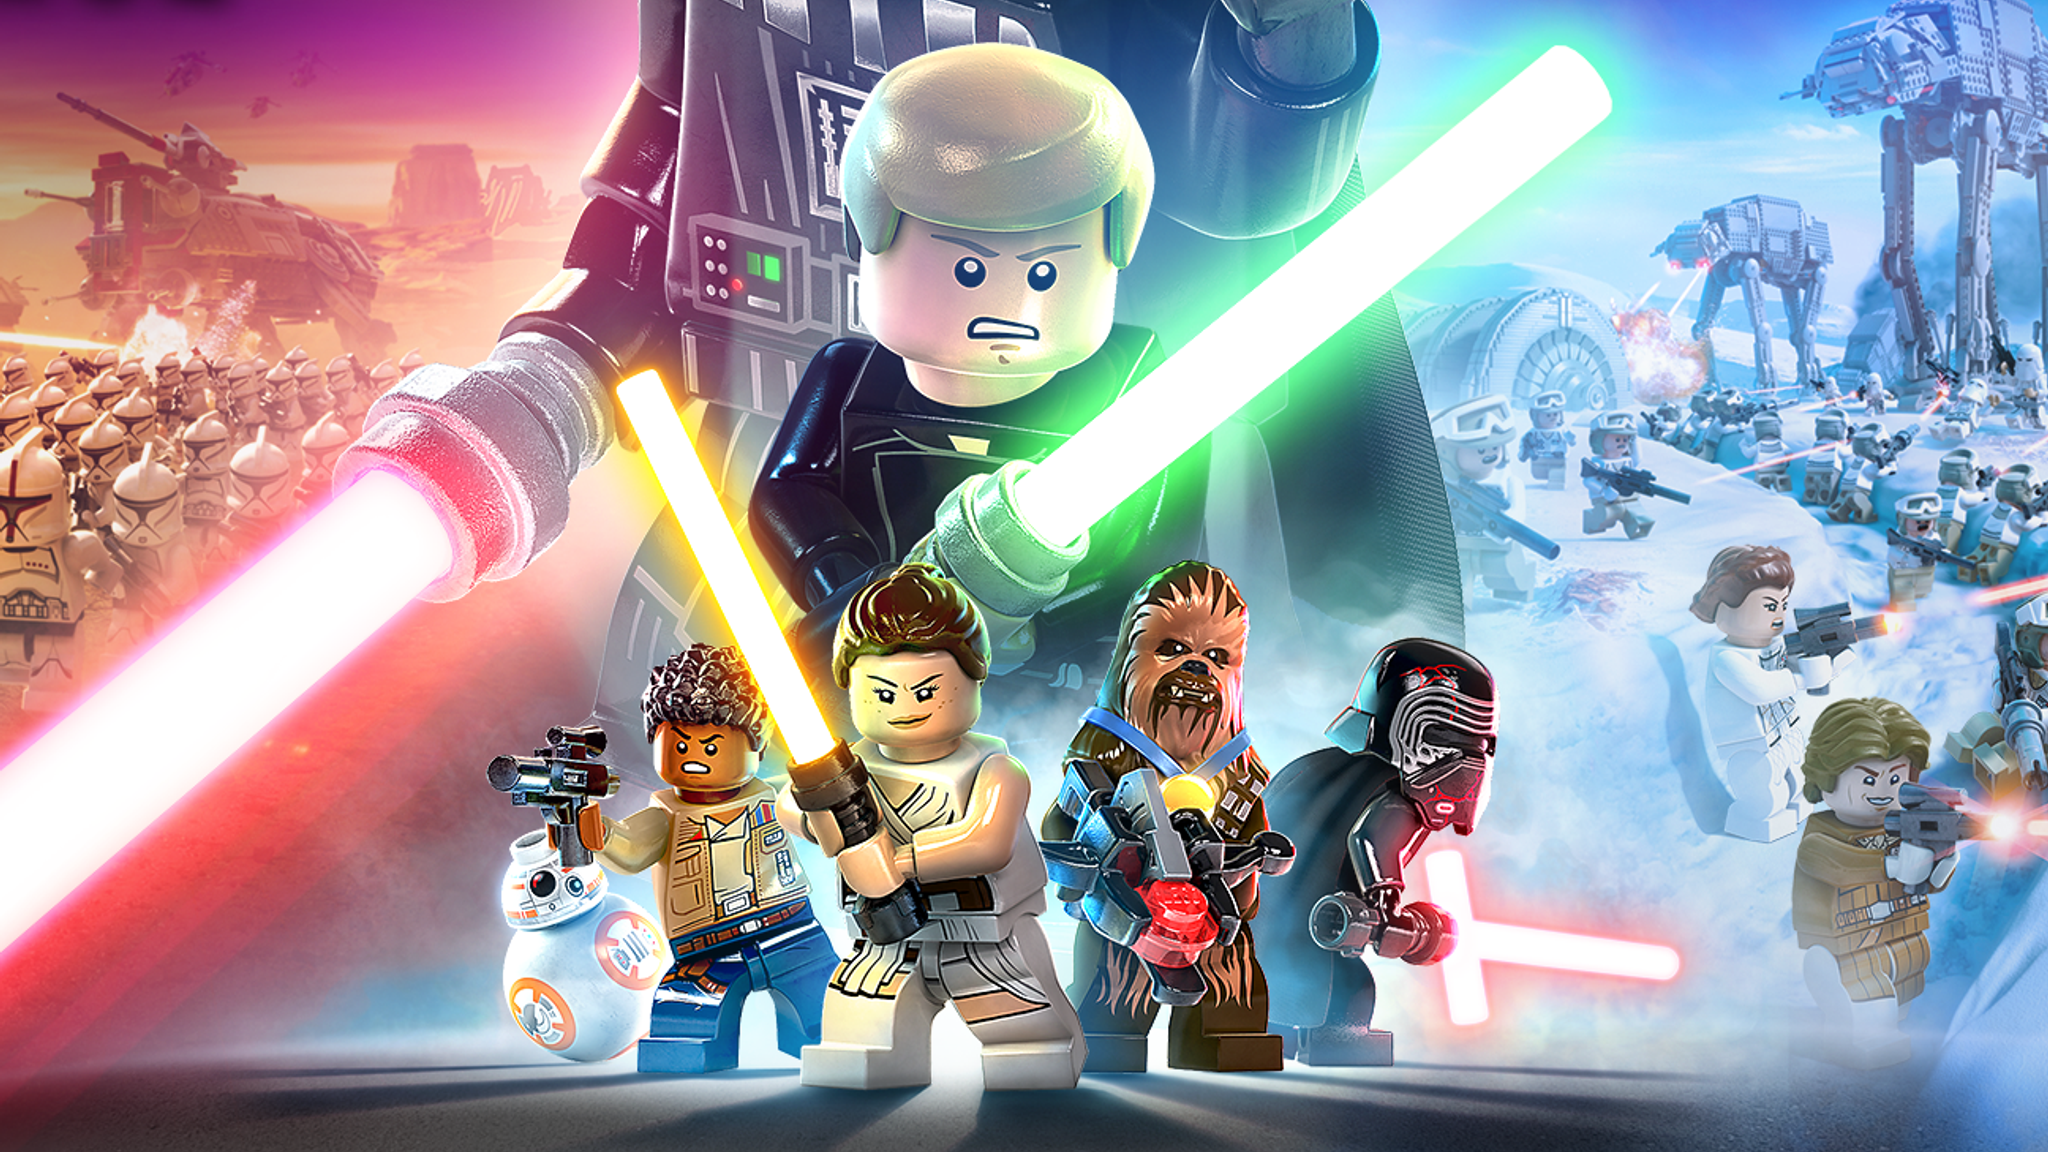 Lego Star Wars: The Skywalker Saga - Xbox One/series X : Target